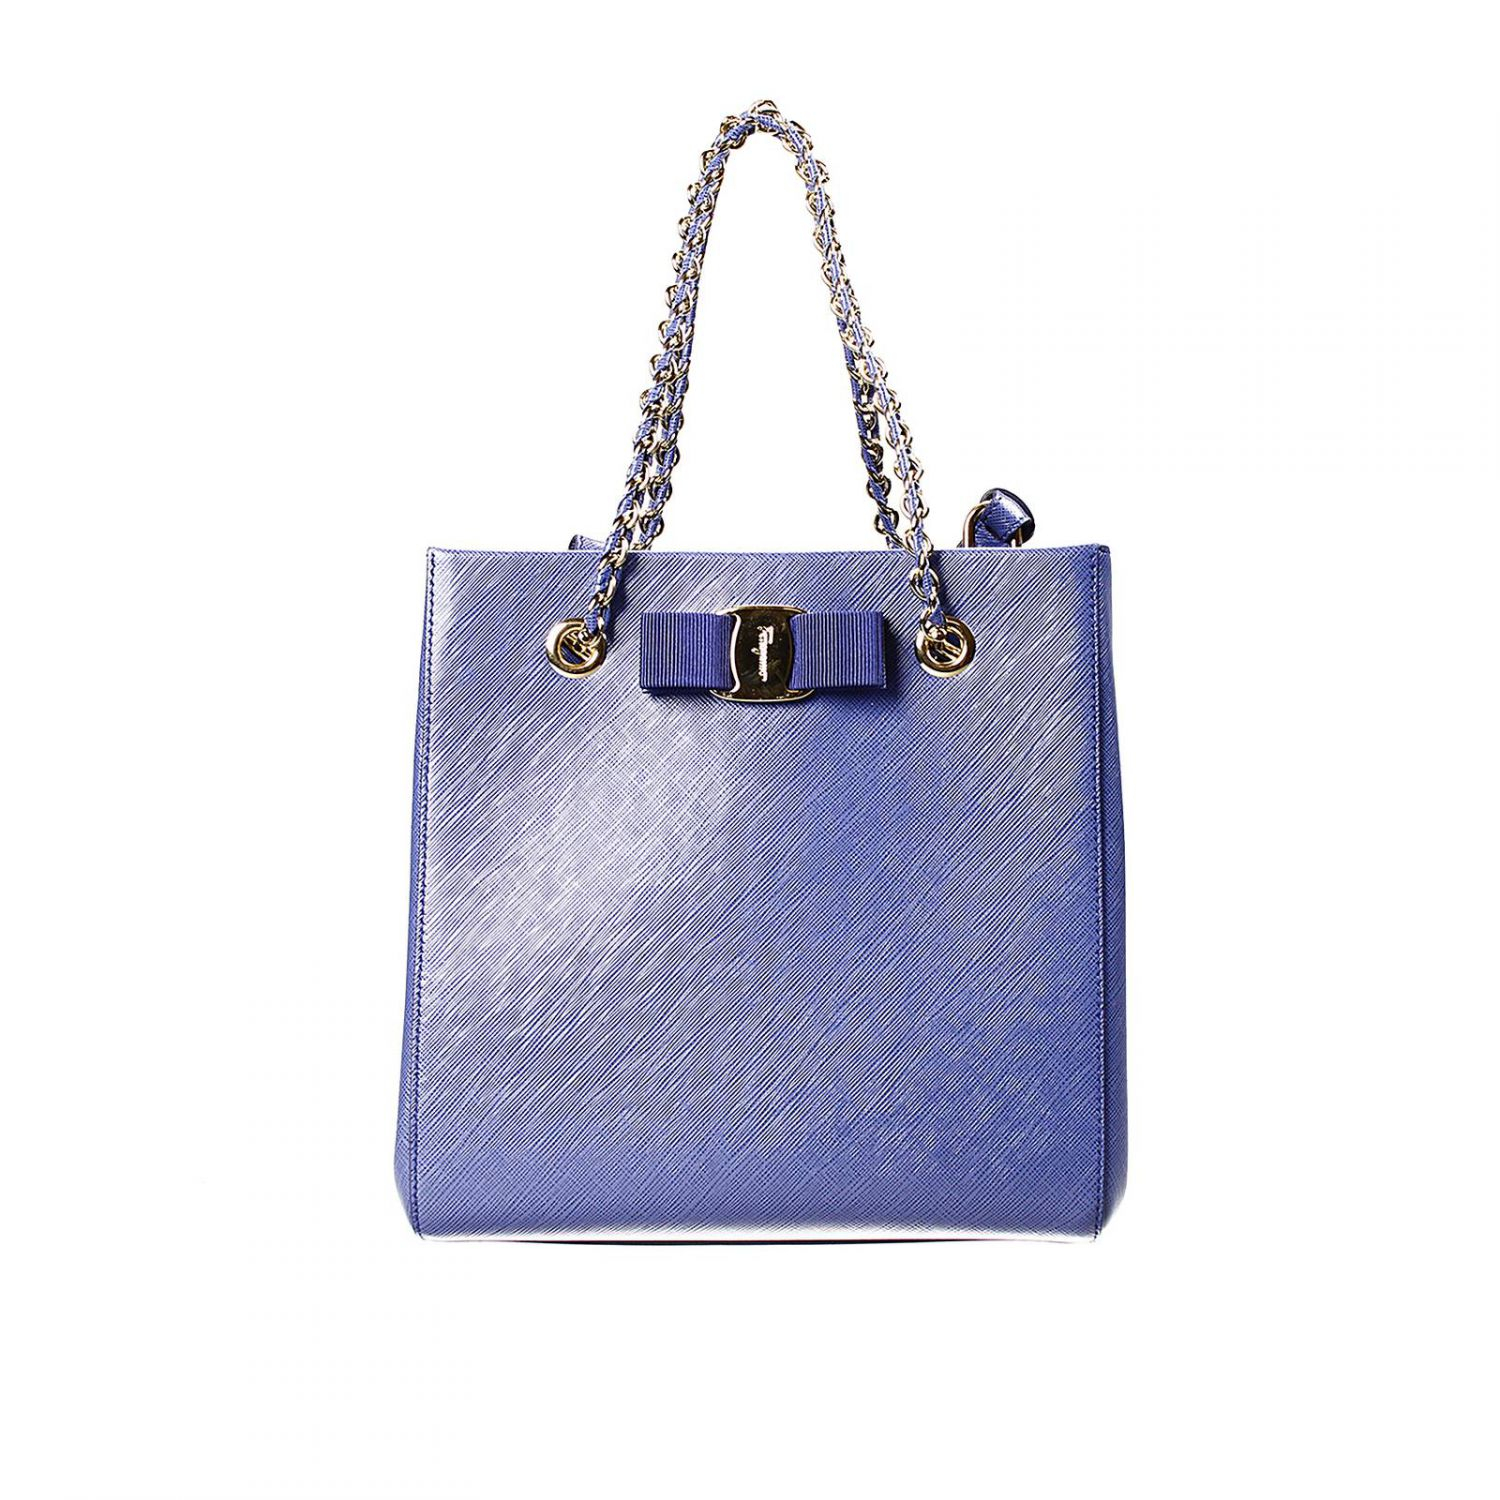 Ferragamo Handbag Bag Vany 2 Handles Chain Leather Tissu With Bow in ...